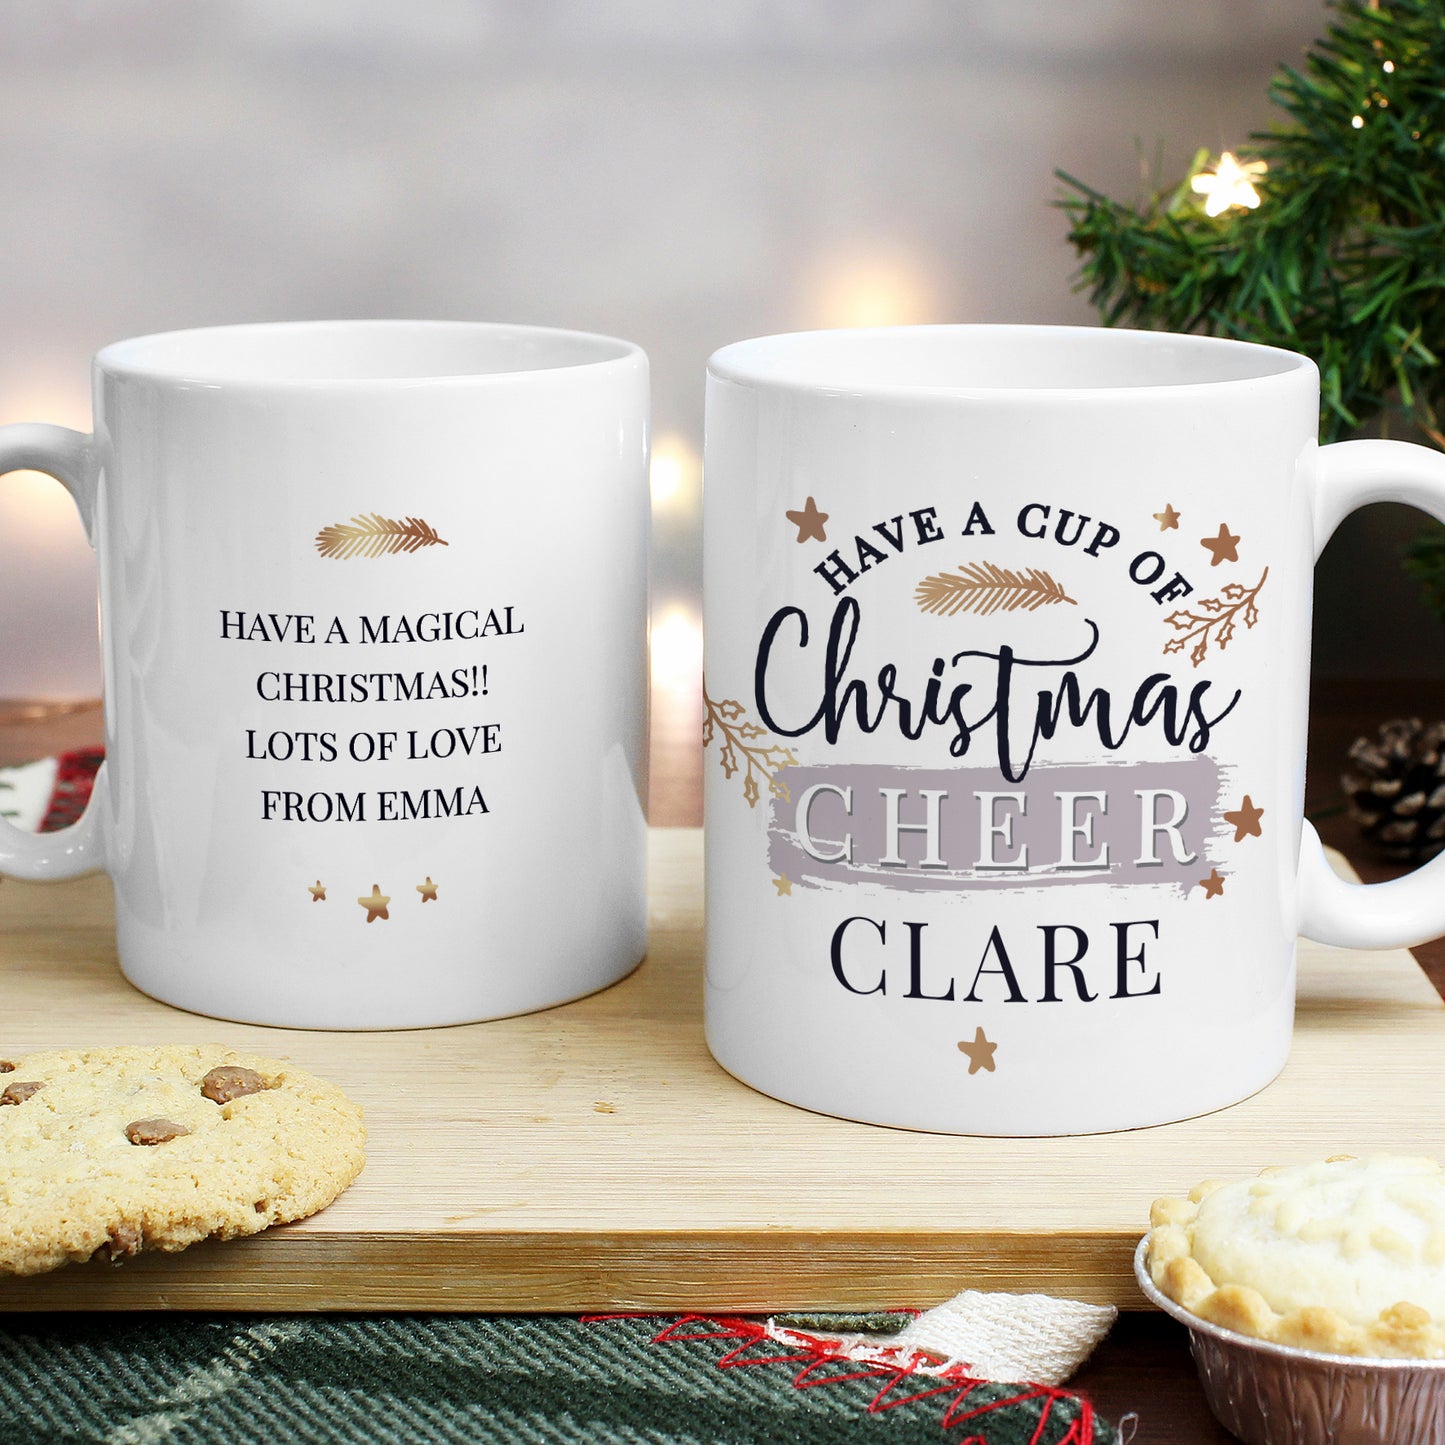 Personalised 'Cup of Christmas Cheer' Mug